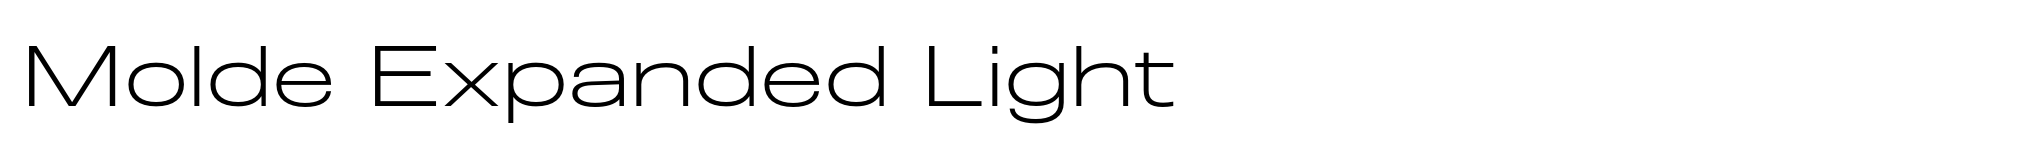 Molde Expanded Light image